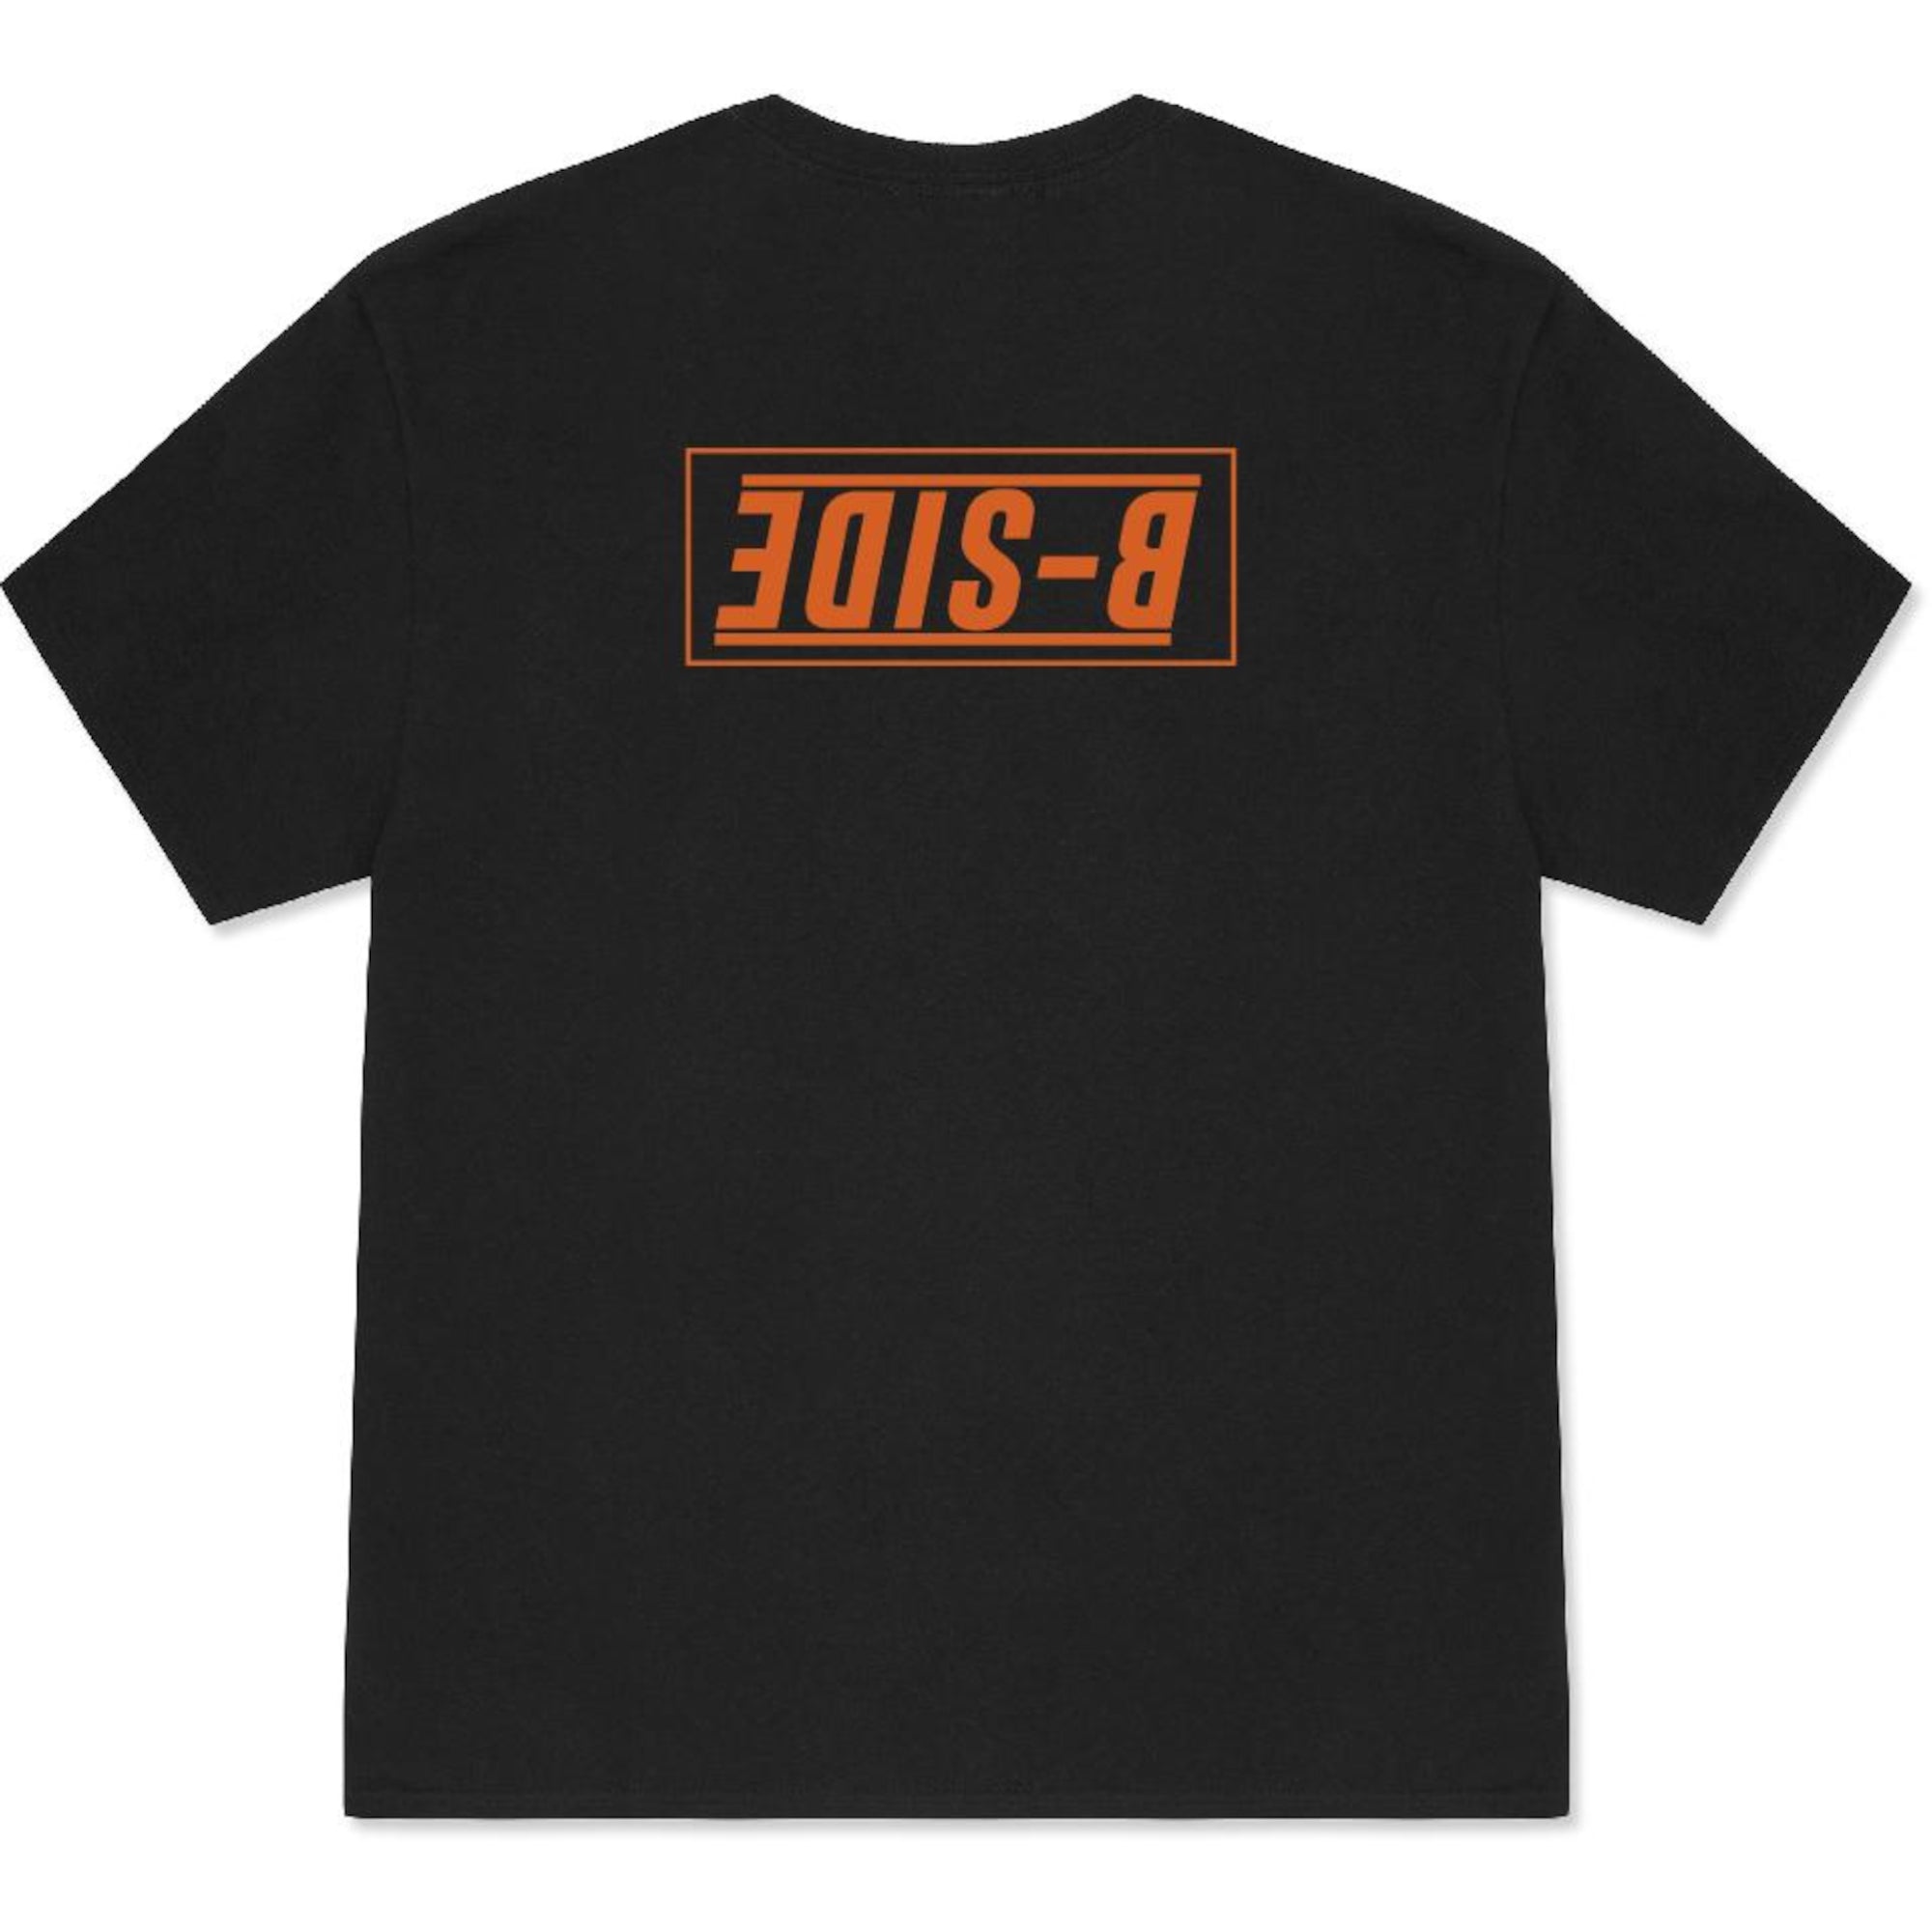 Black Project B-side T-Shirt - Orange Print